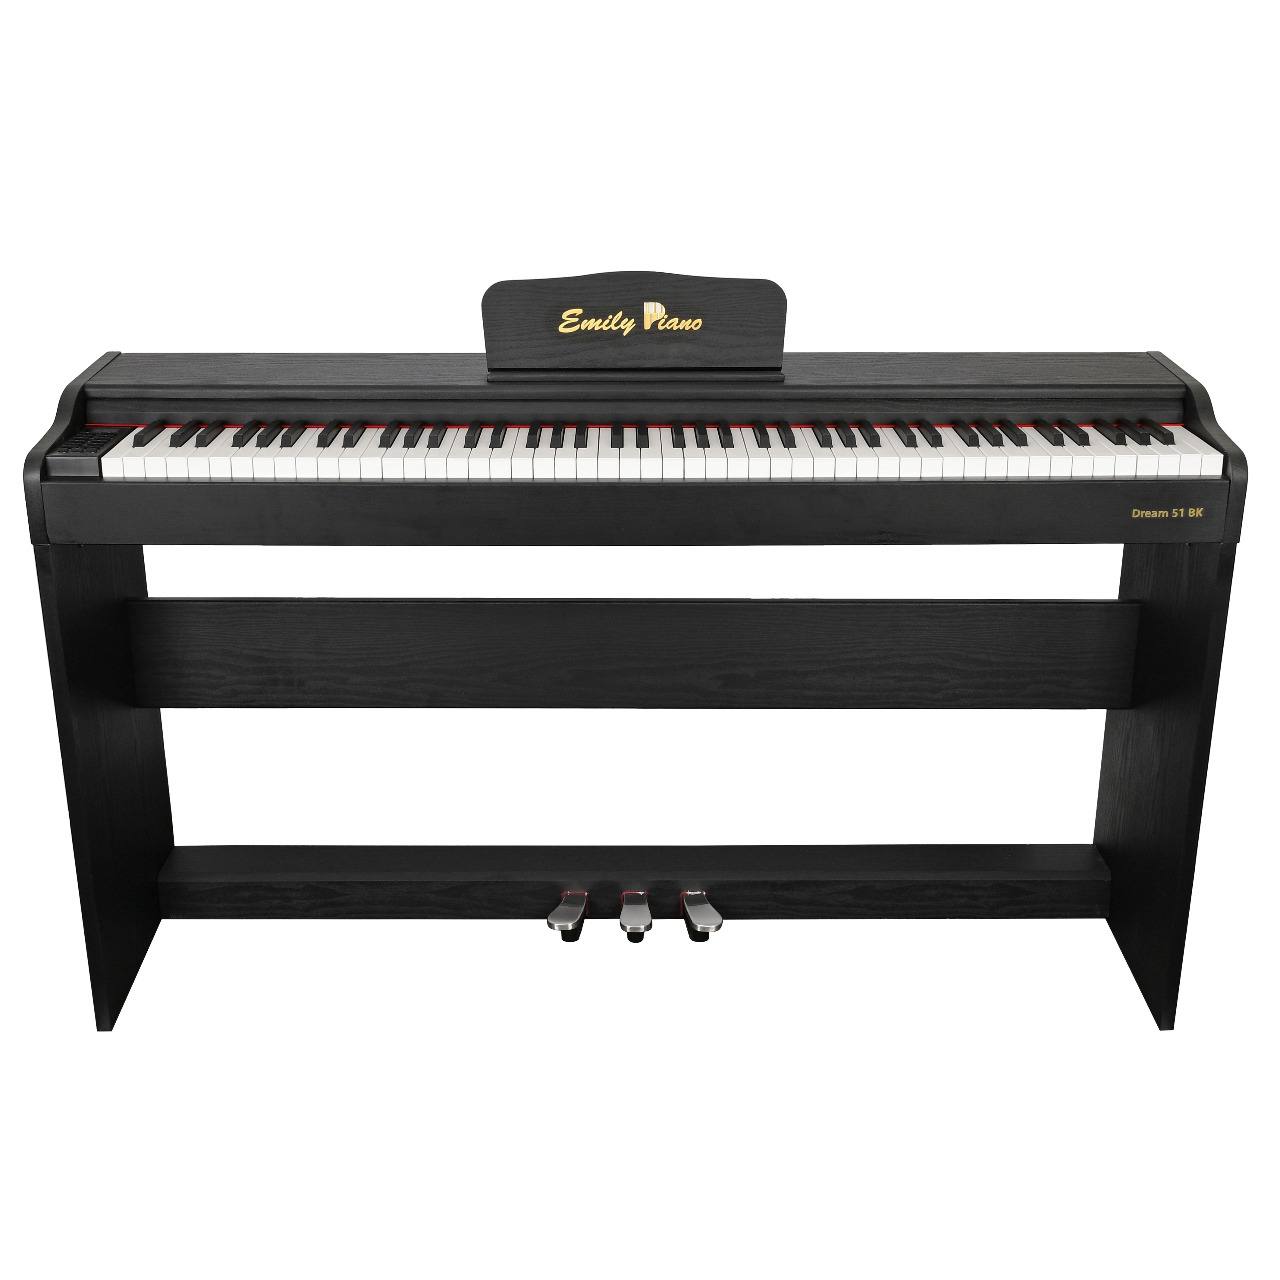 EMILY PIANO D-51 BK - Цифровое пианино